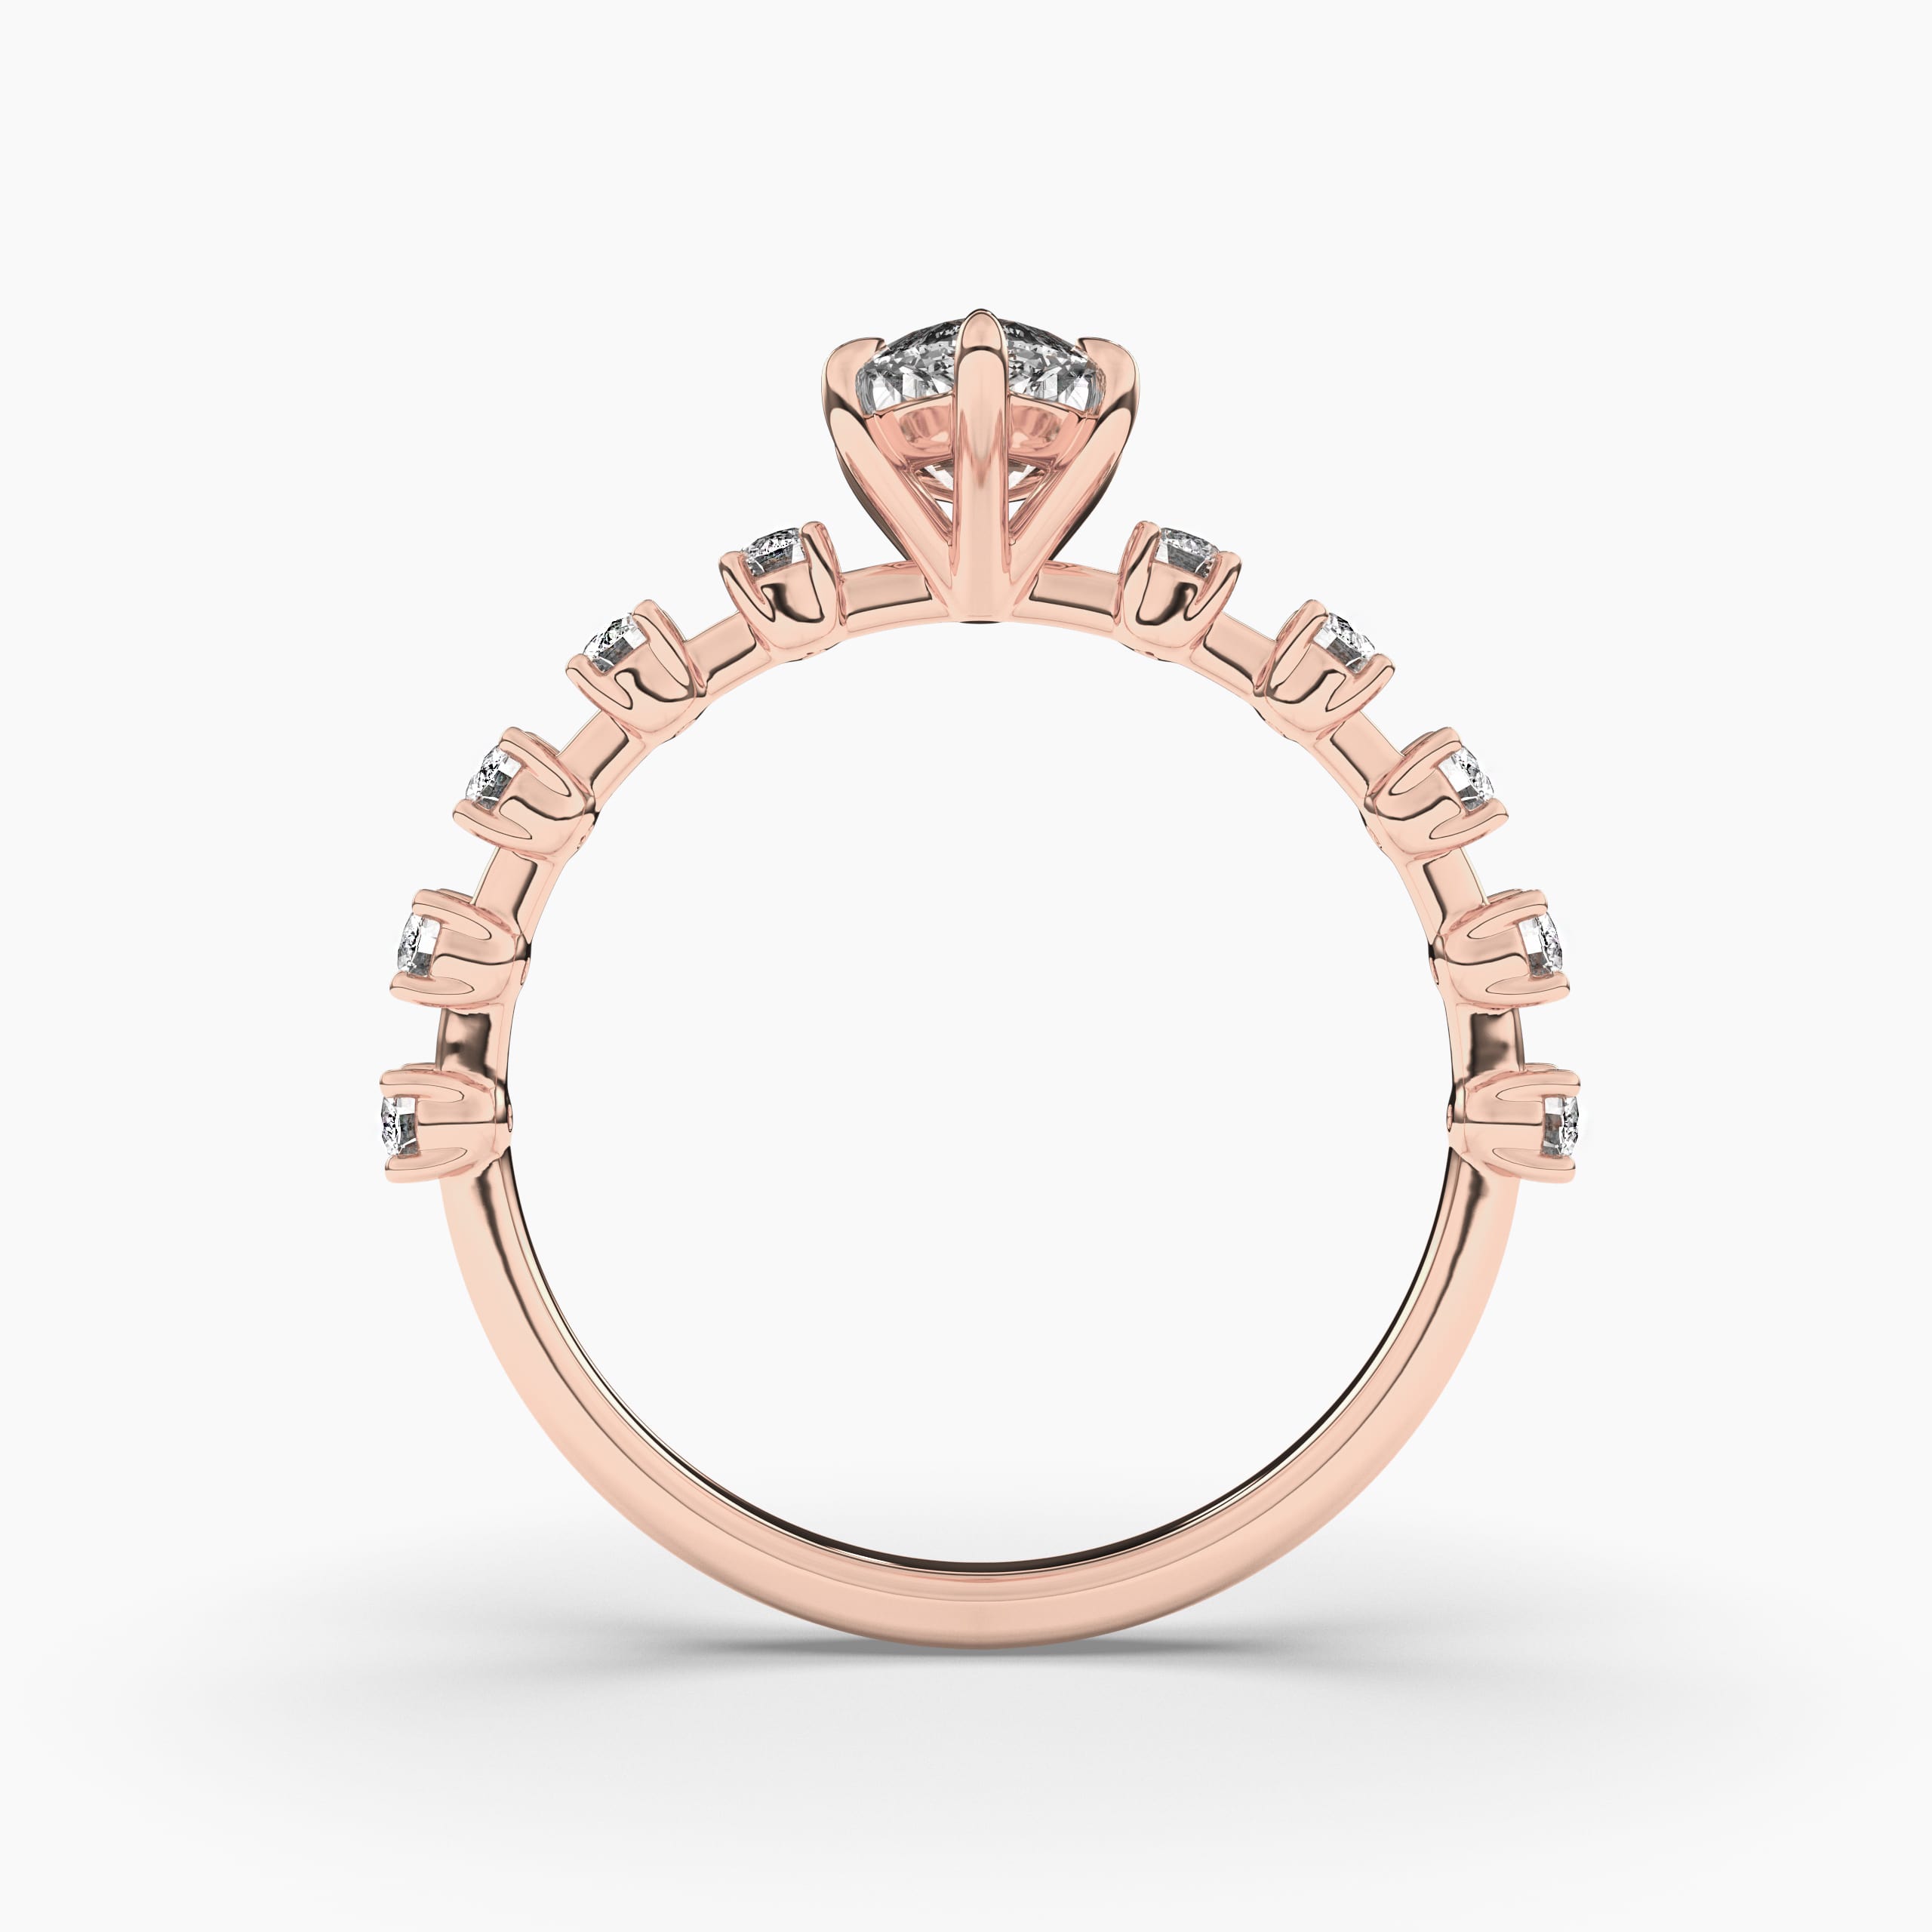 rose gold diamond engagement ring 